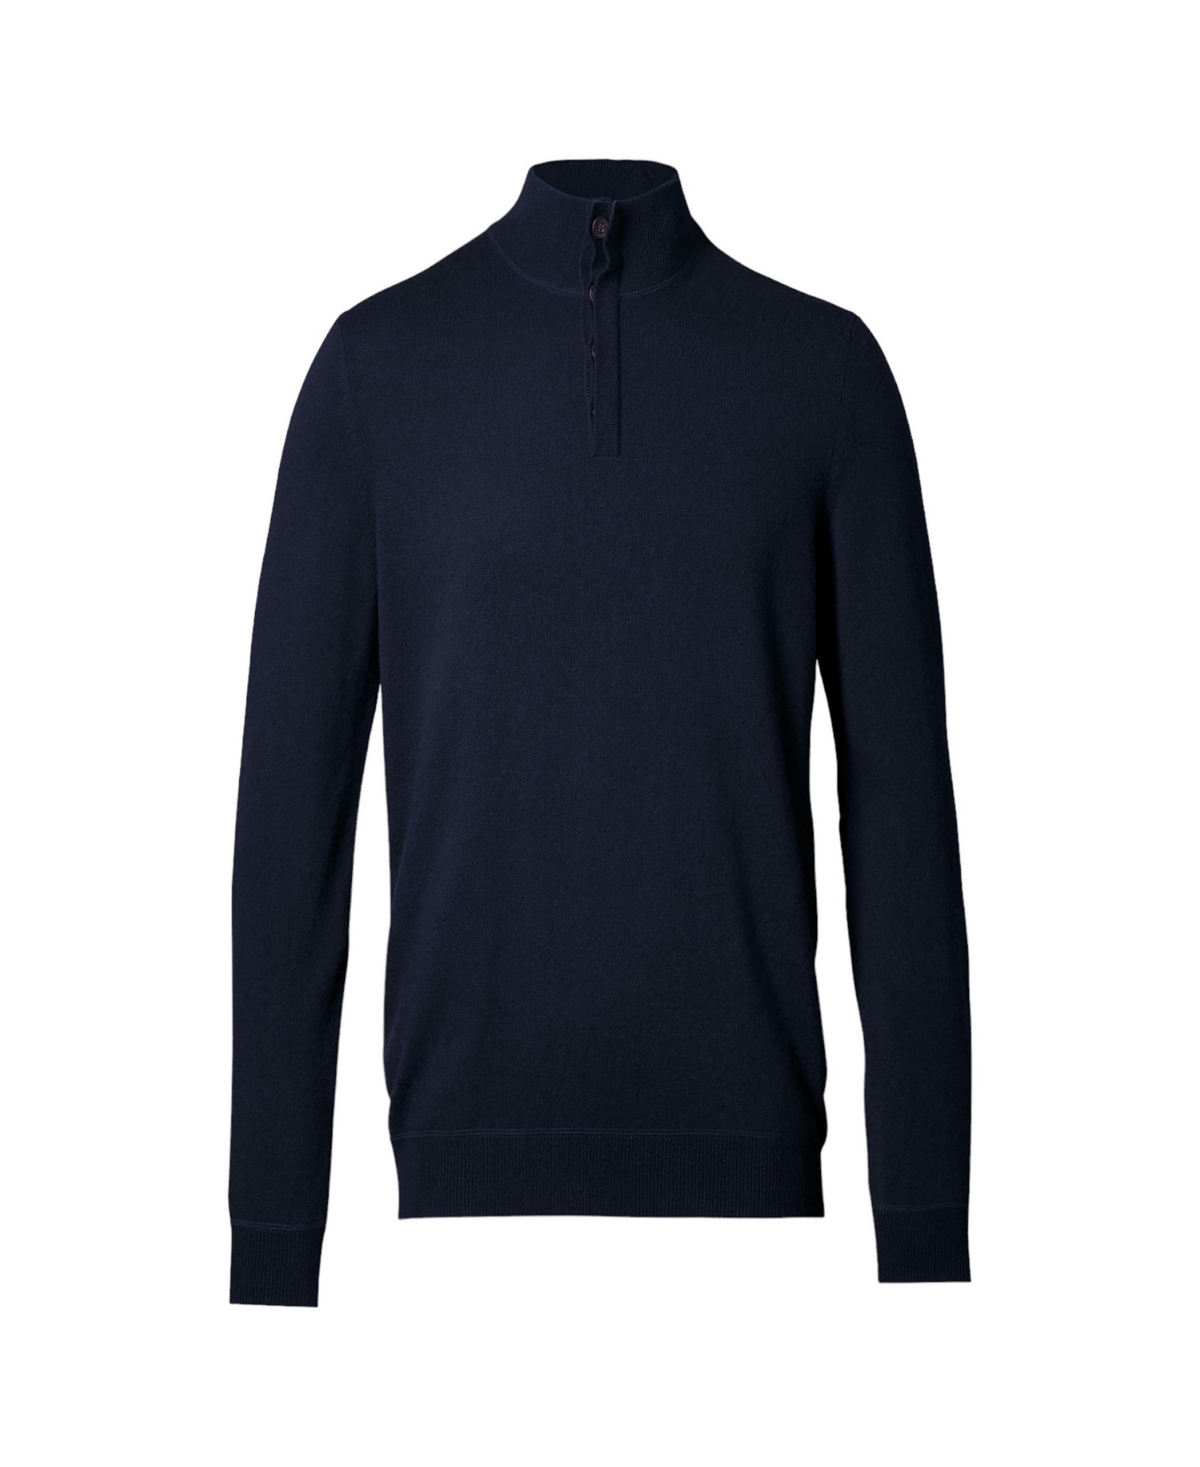 Men's Merino/Cashmere Button Neck Sweater - Silver grey